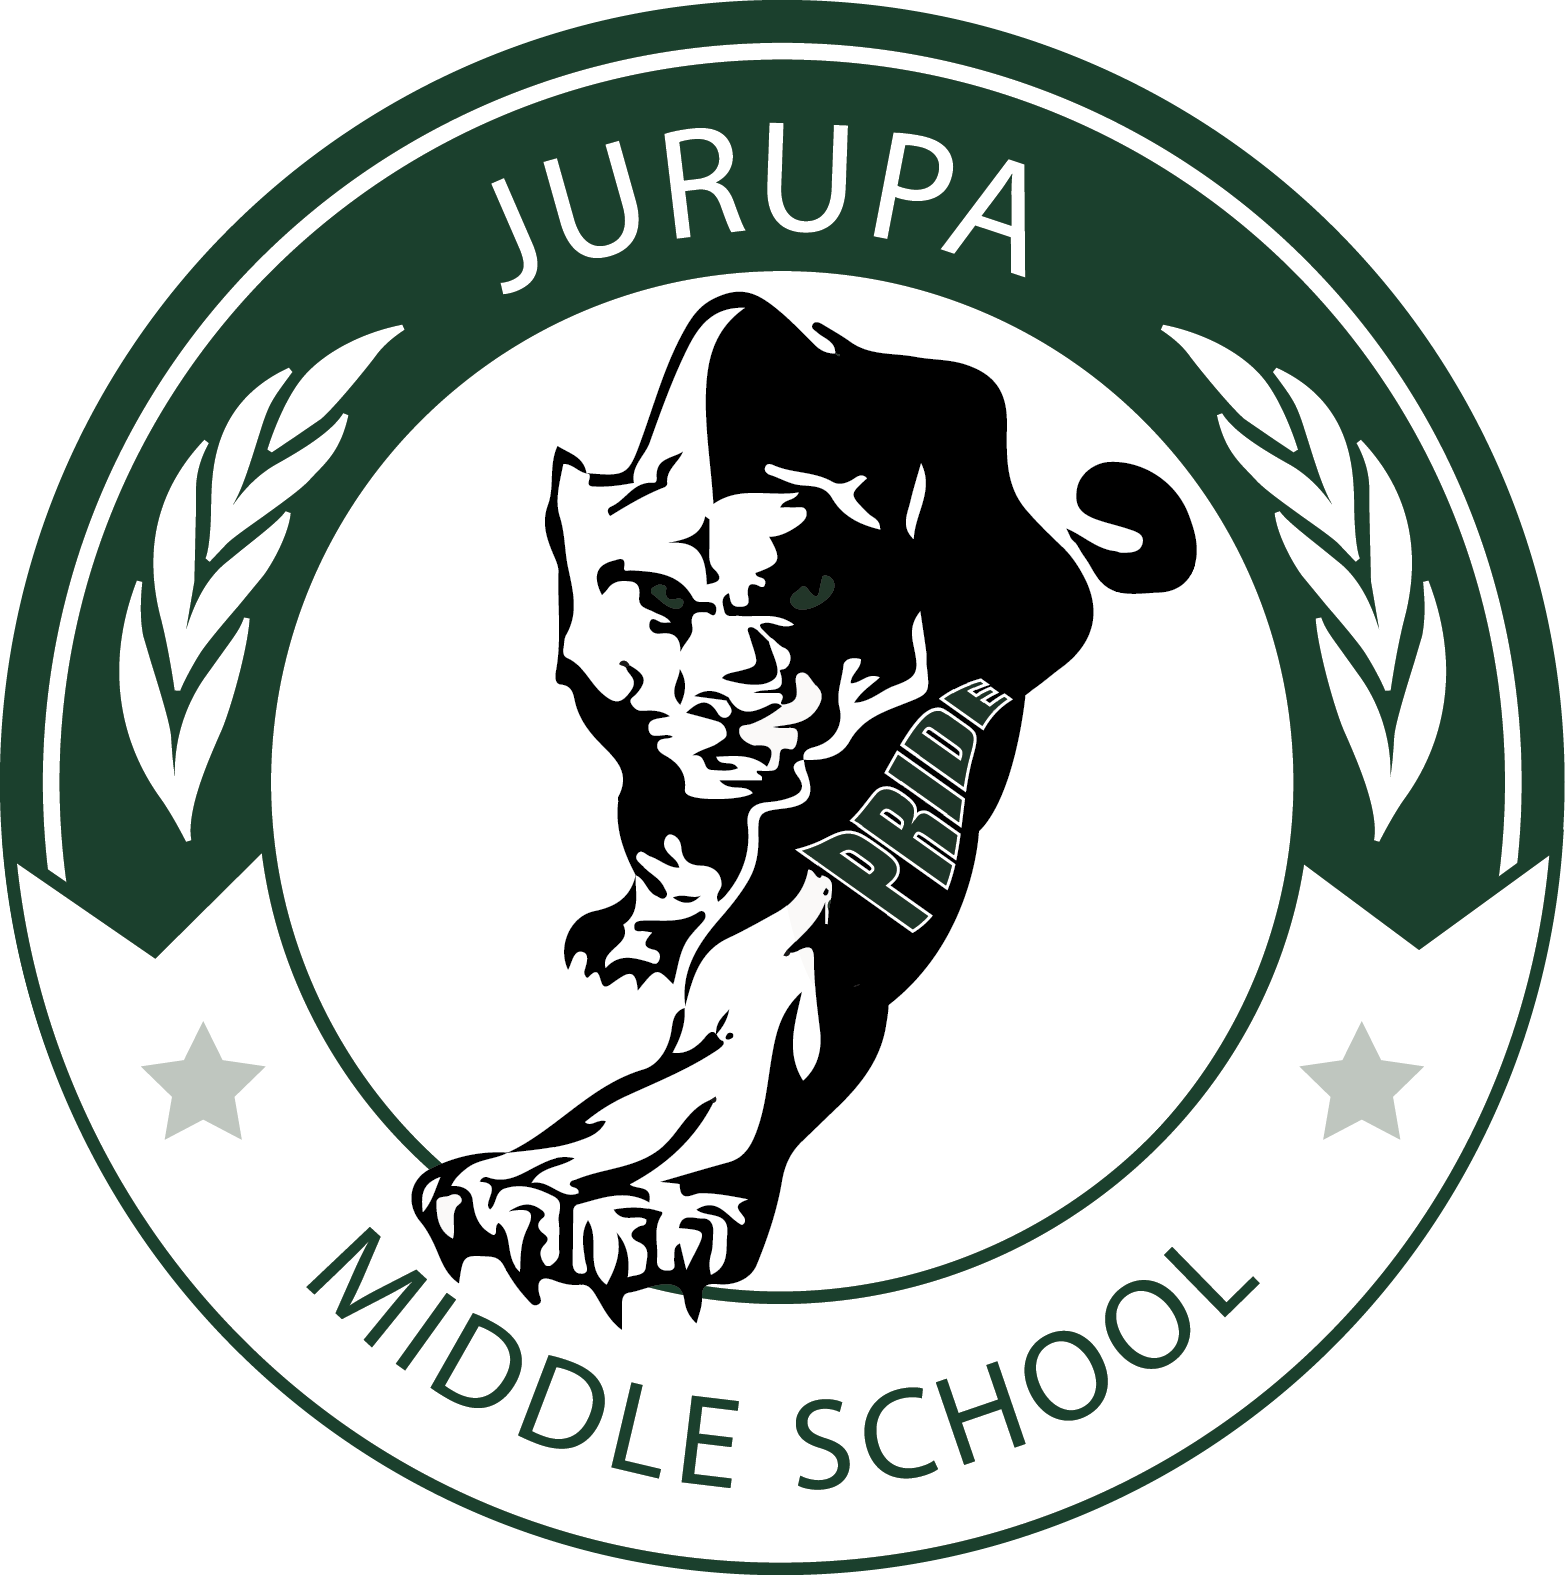 Jurupa Middle logo2.png